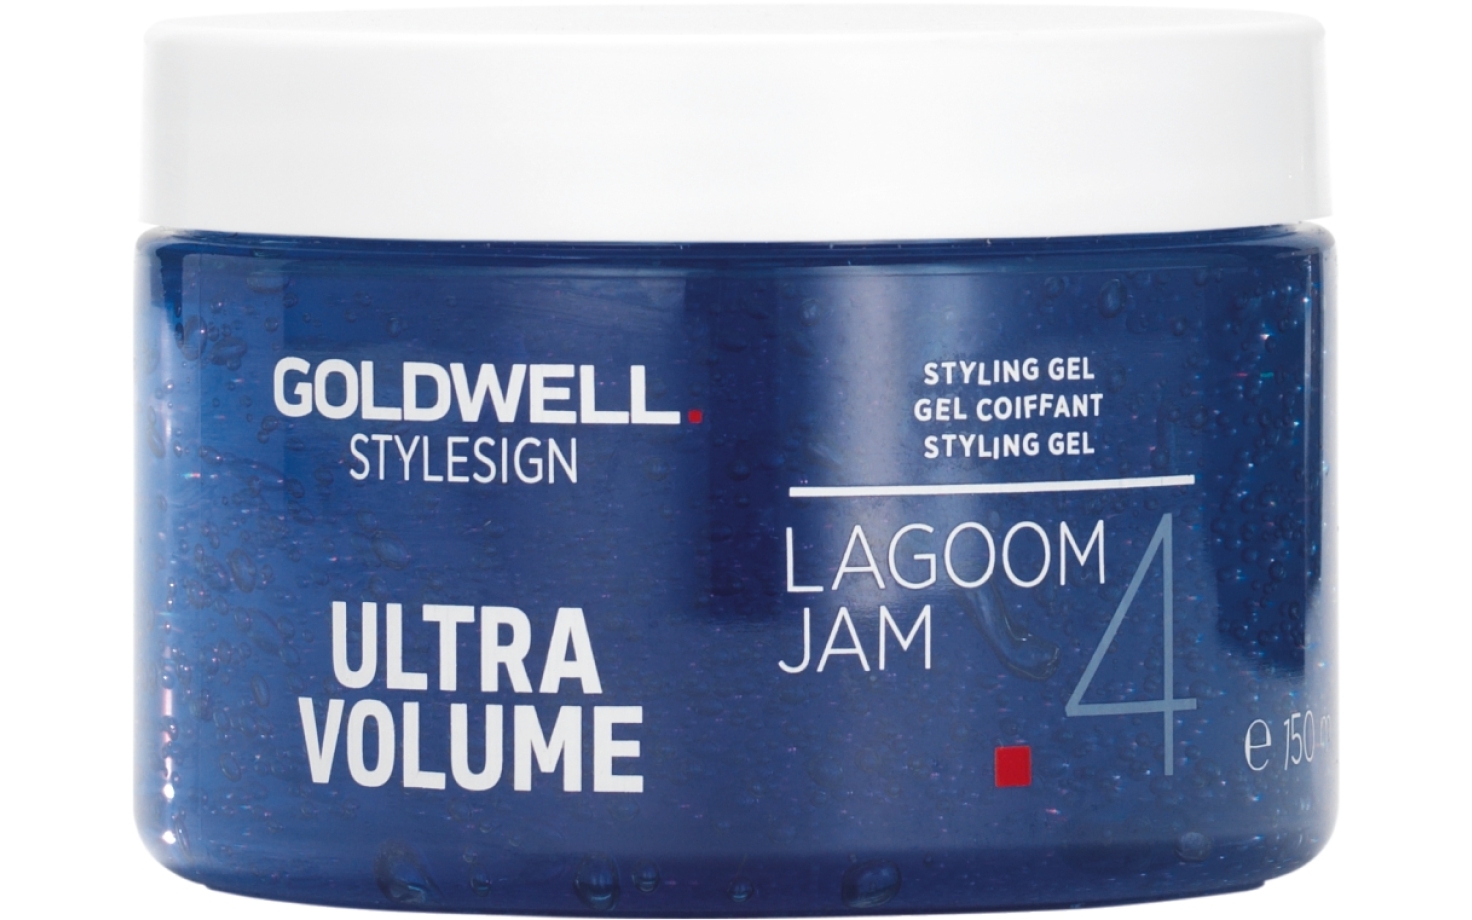 Stylesign Ultra Volume Lagoom Jam